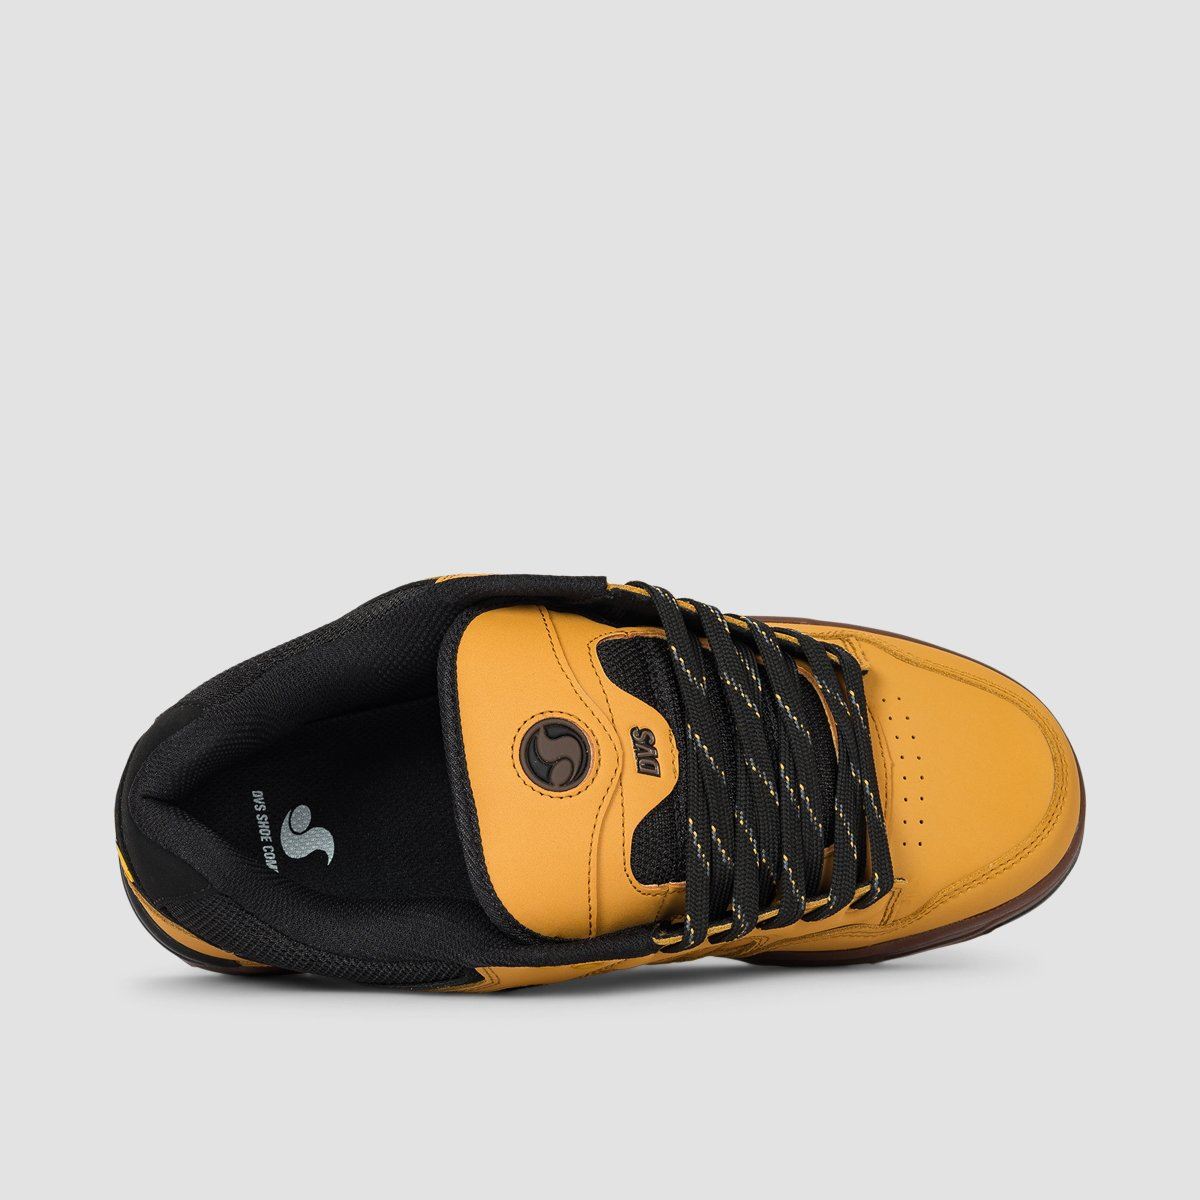 DVS Enduro Heir Shoes - Chamois/Black/Gum Nubuck